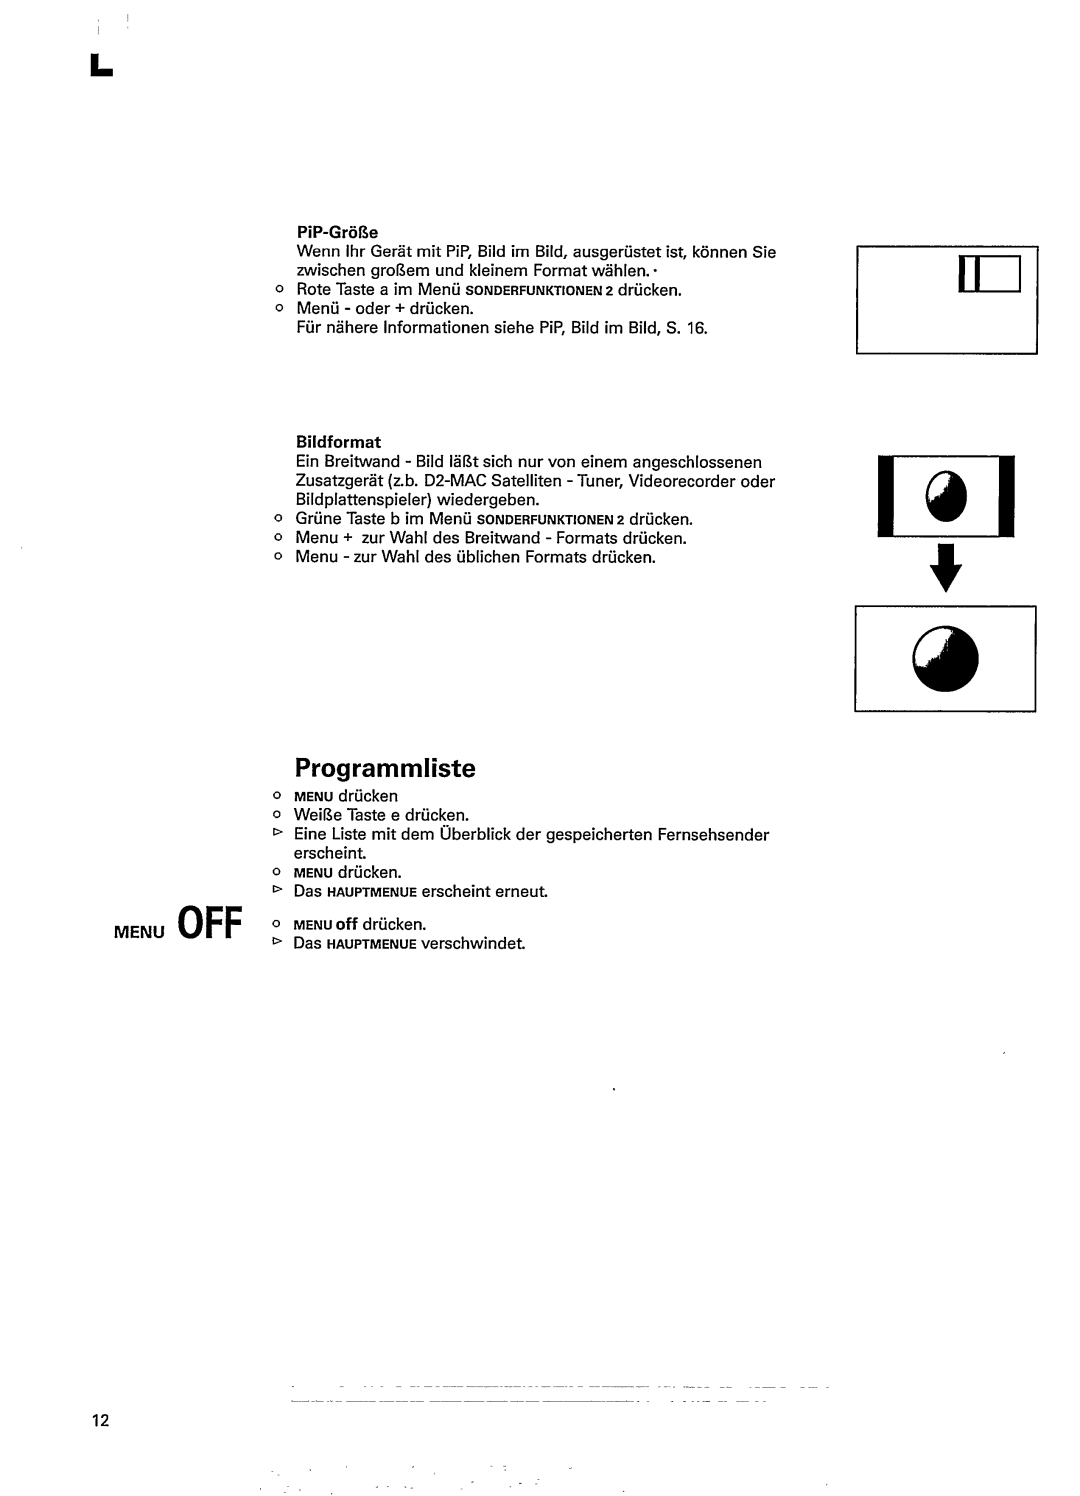 Philips 28ML8926 manual 